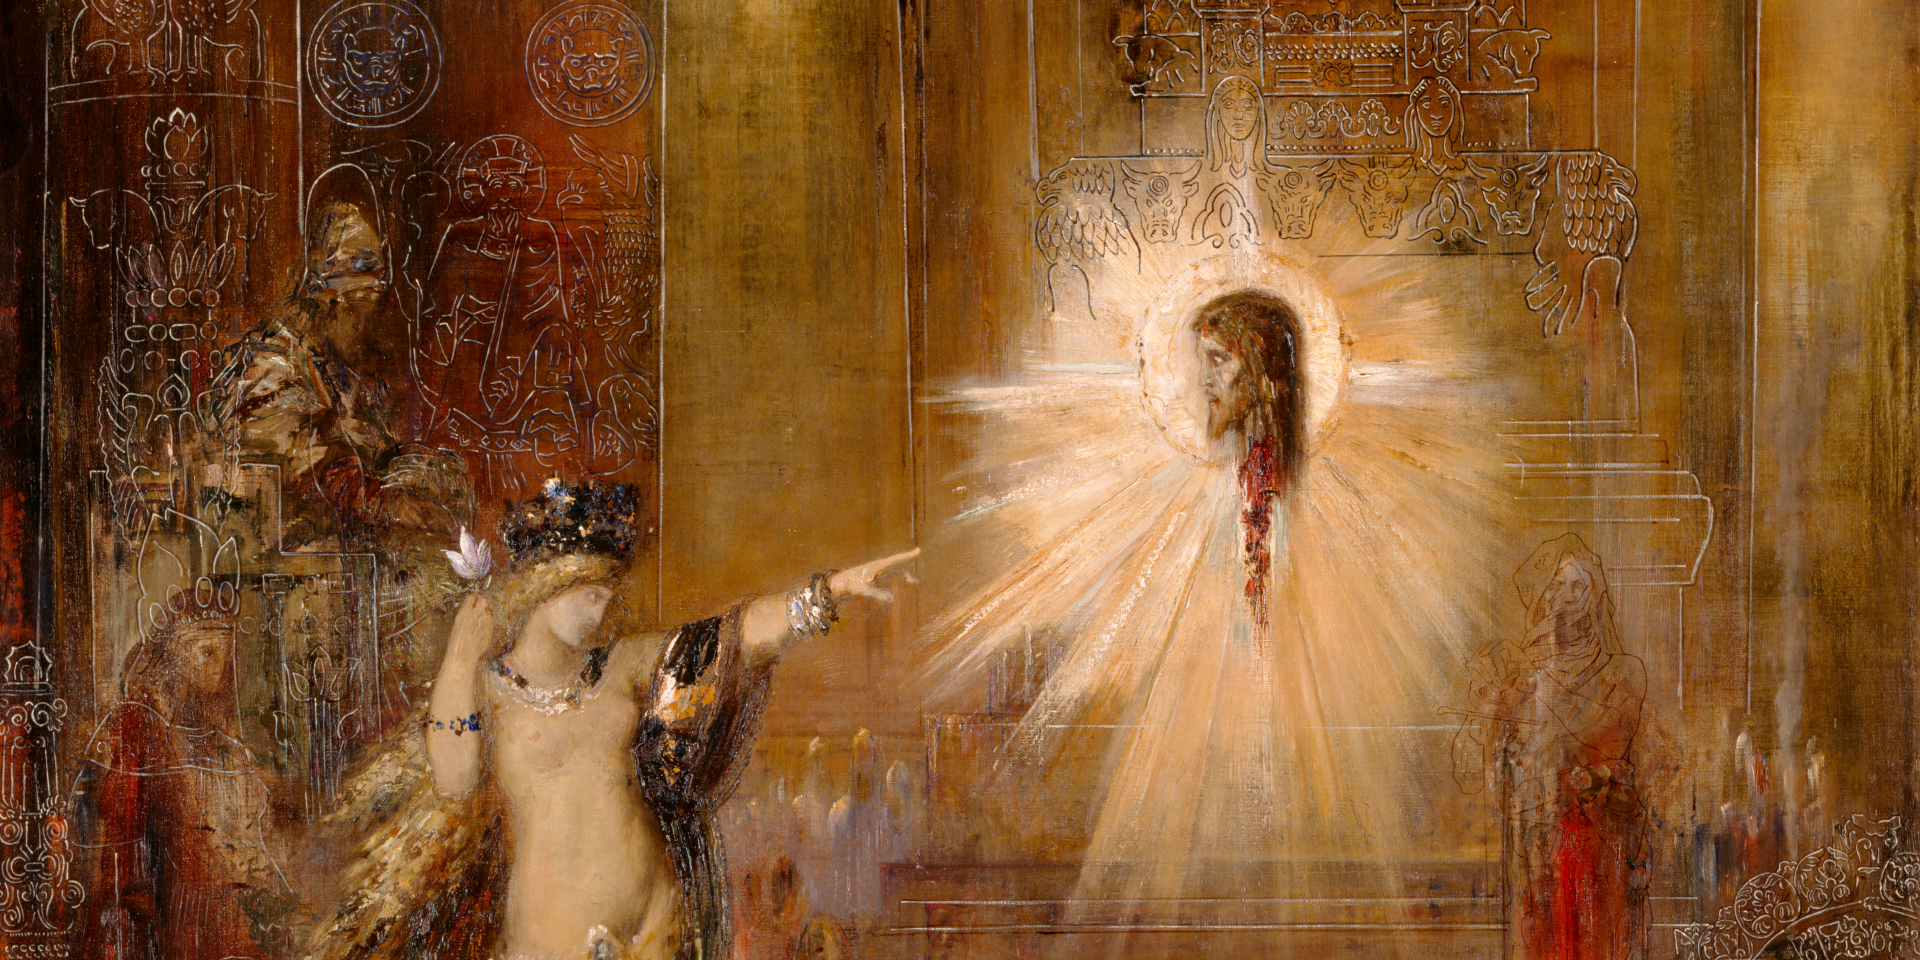  Gustave Moreau, "L'Apparition"